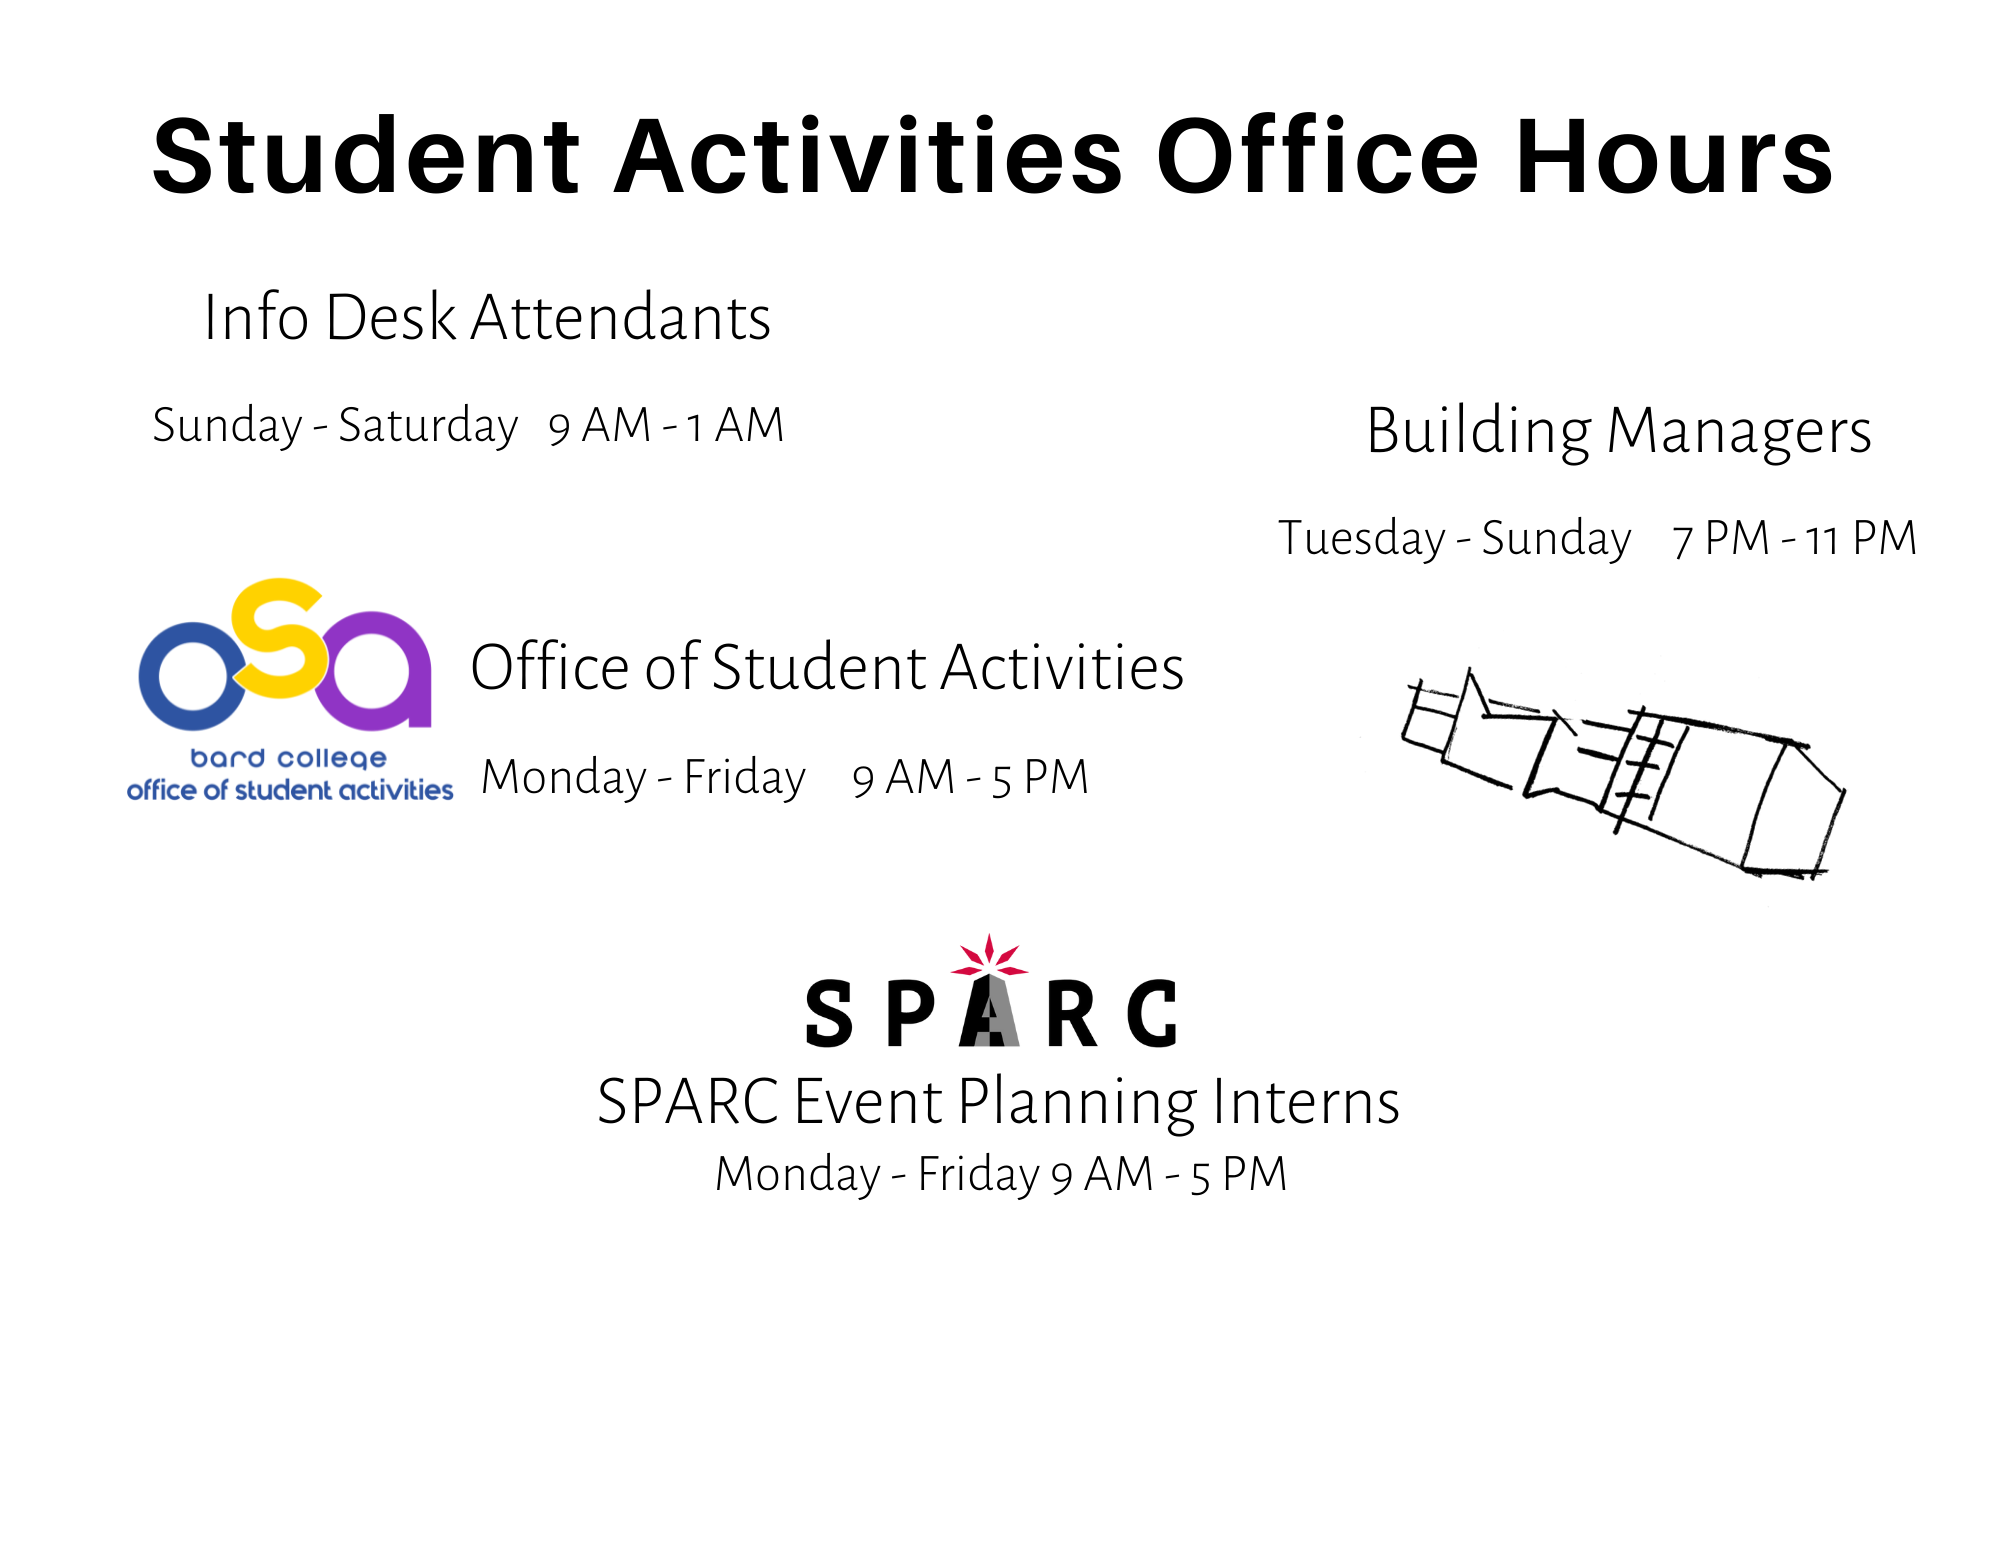 SPARC/Campus Center Hours